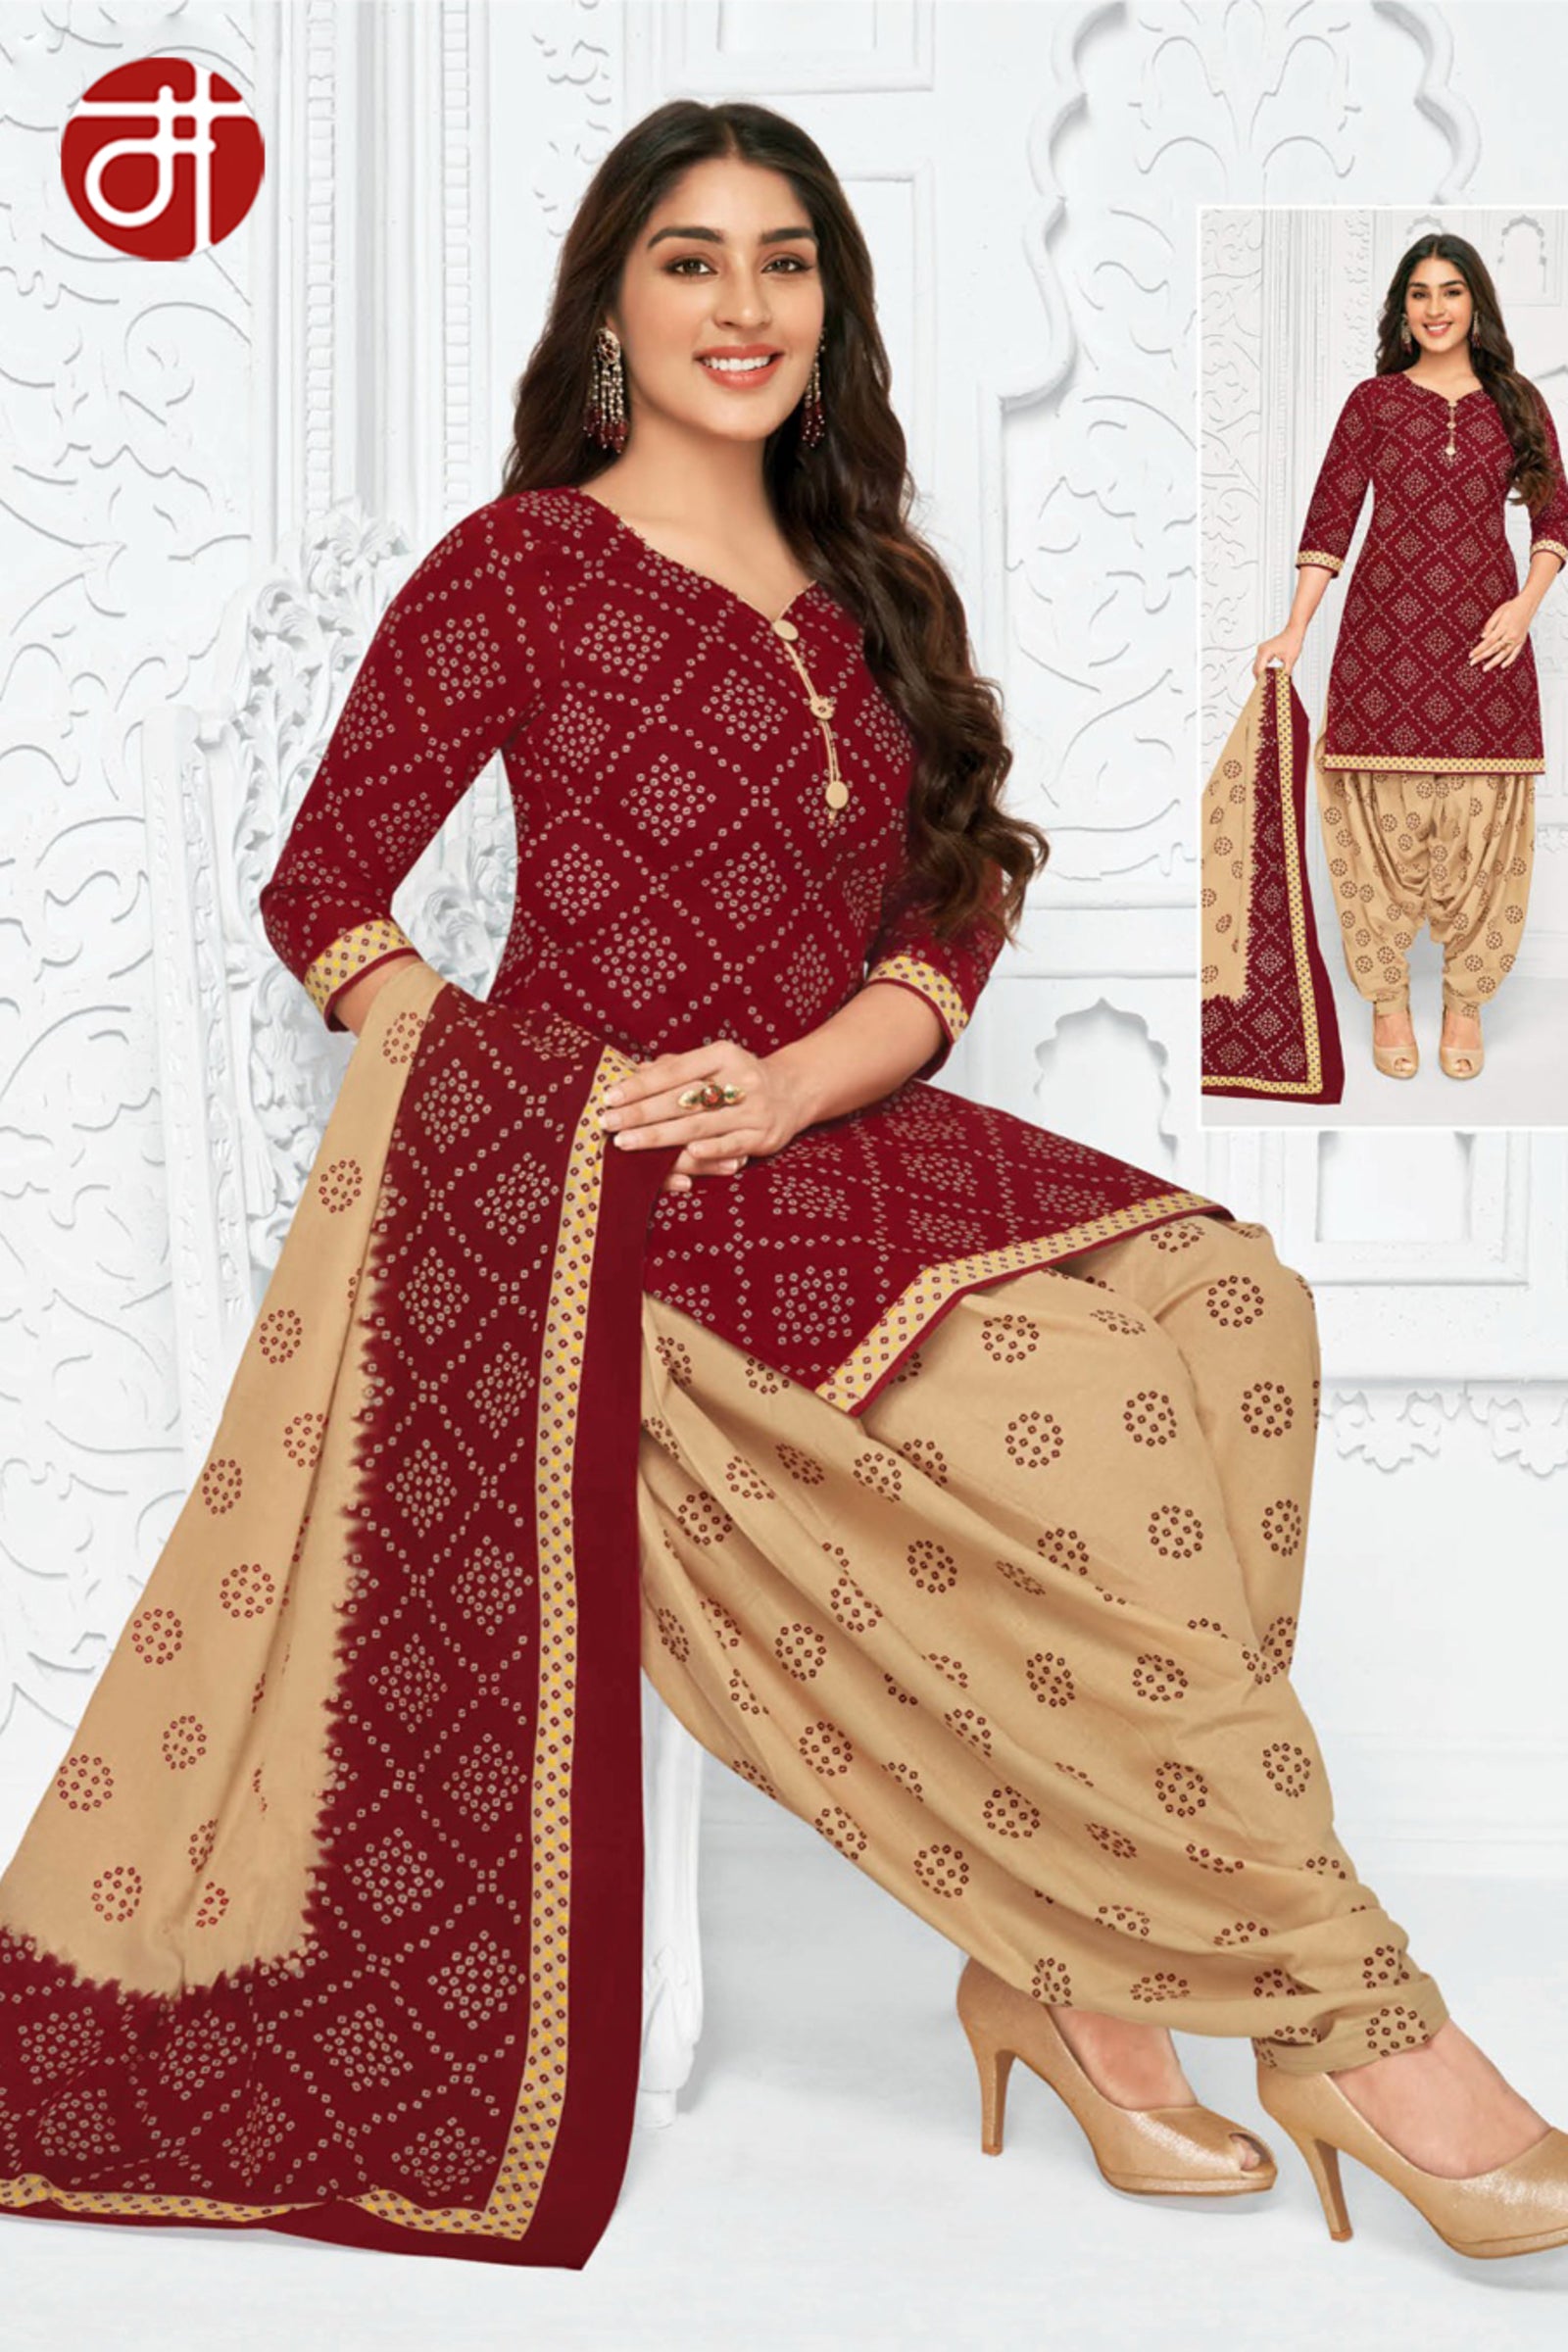 Aishwarya Sharma Bhatt | Dress design patterns, Fancy dress design,  Chudidar designs